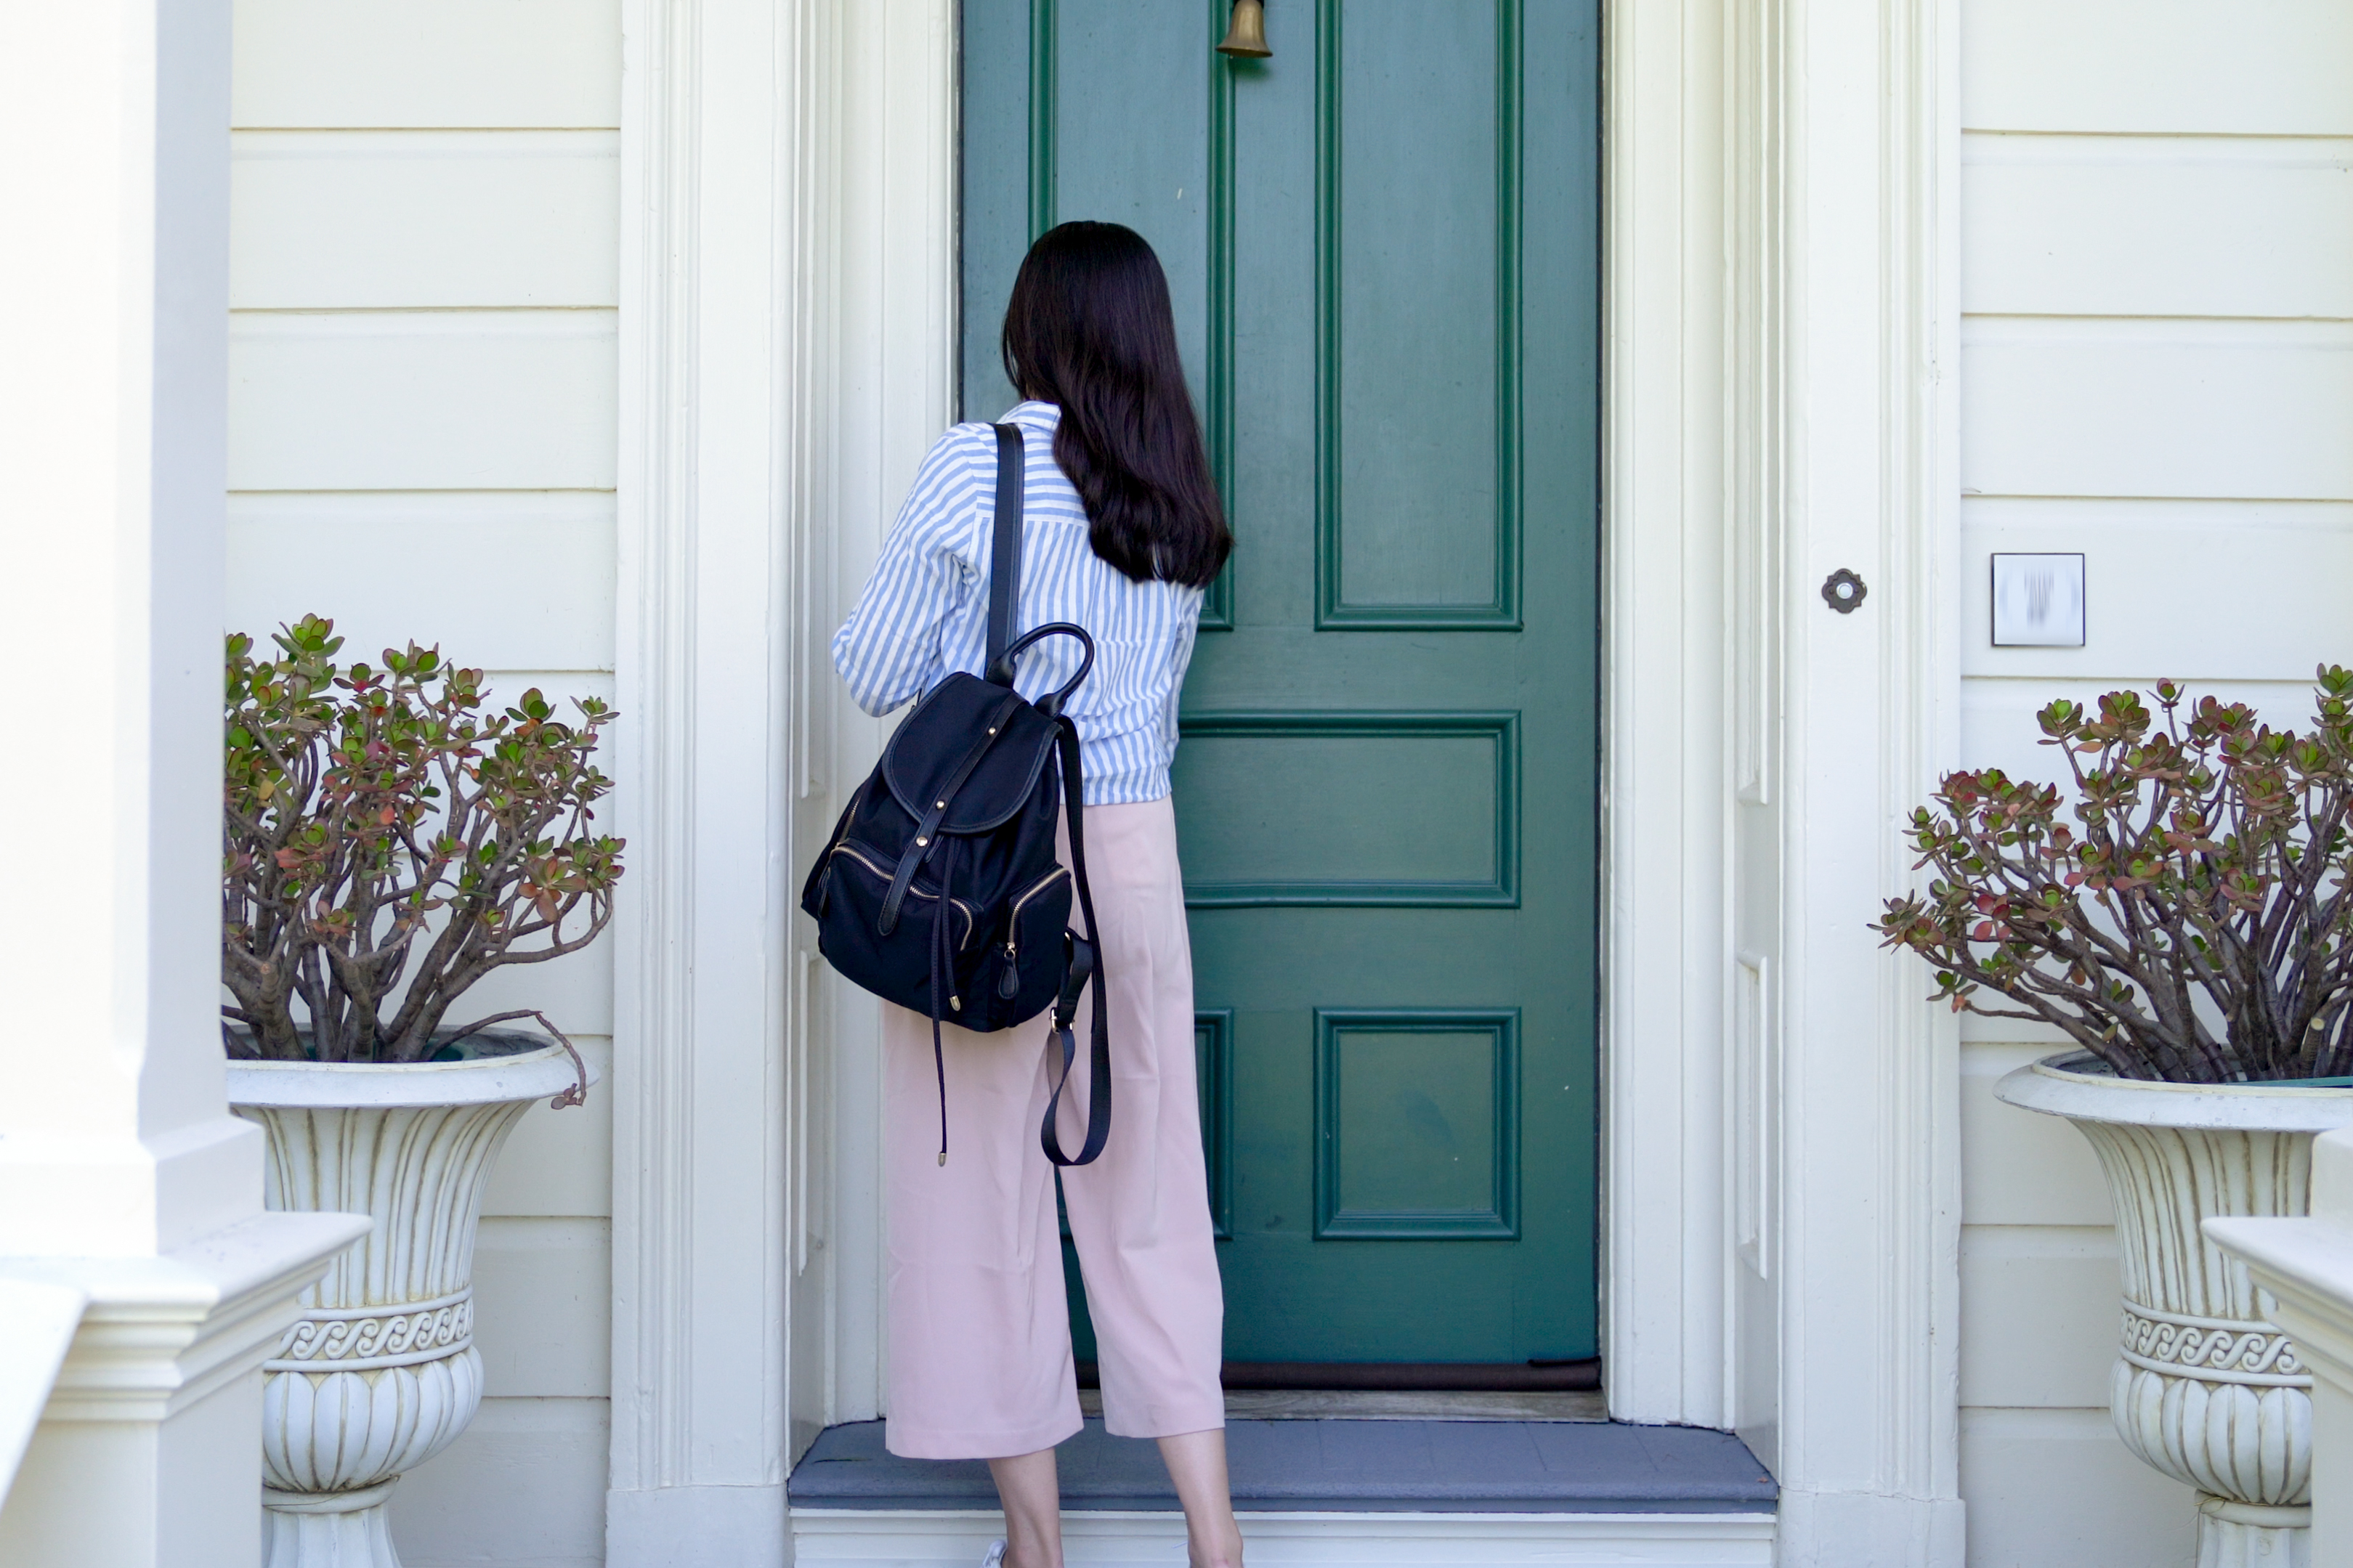 College student carrying backpack knocks the door. | Source: Shutterstock